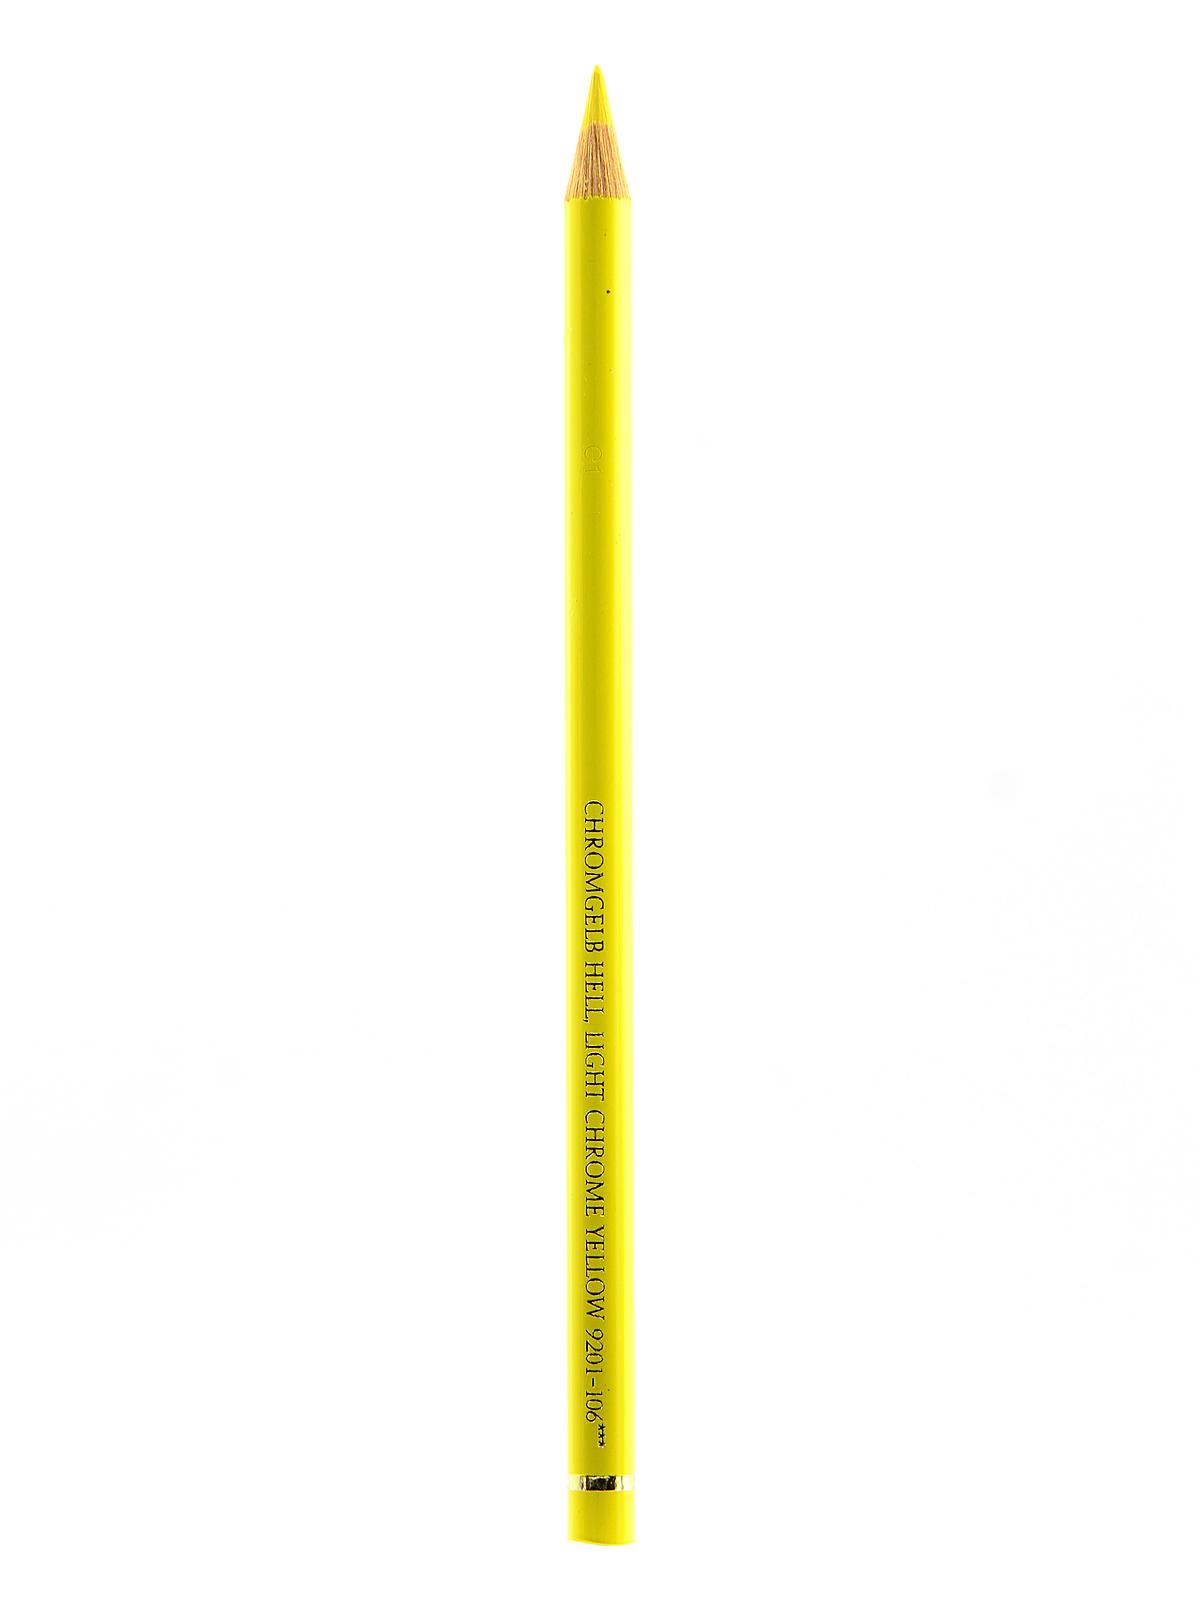 Polychromos Artist Colored Pencils (each) Light Chrome Yellow 106